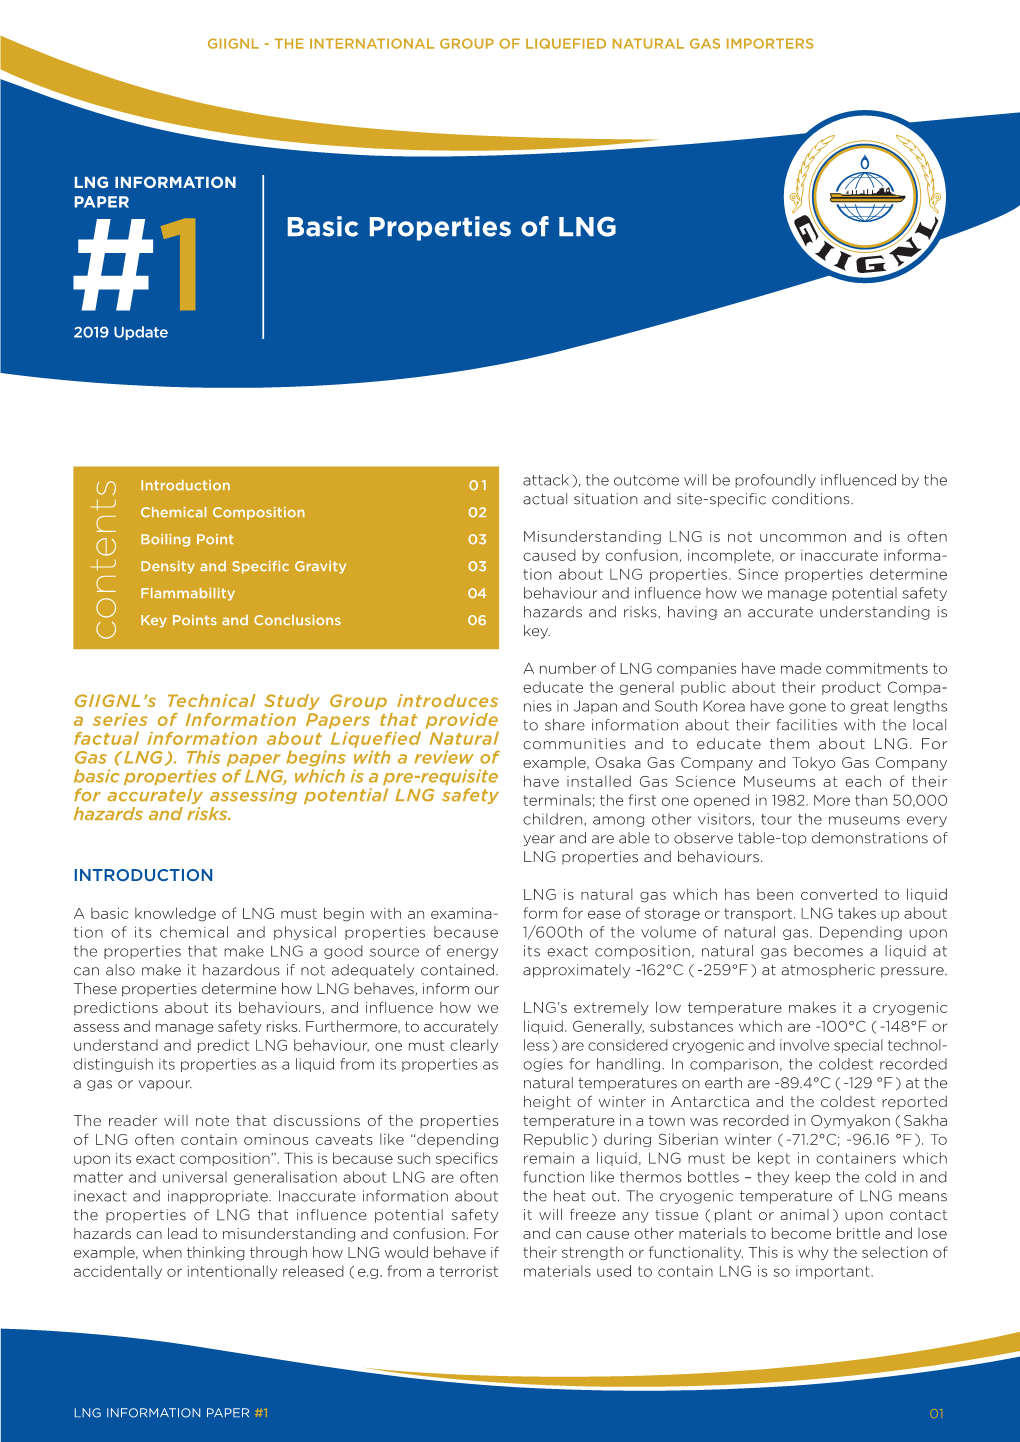 GIIGNL Information Paper N°1 – Basic Properties Of